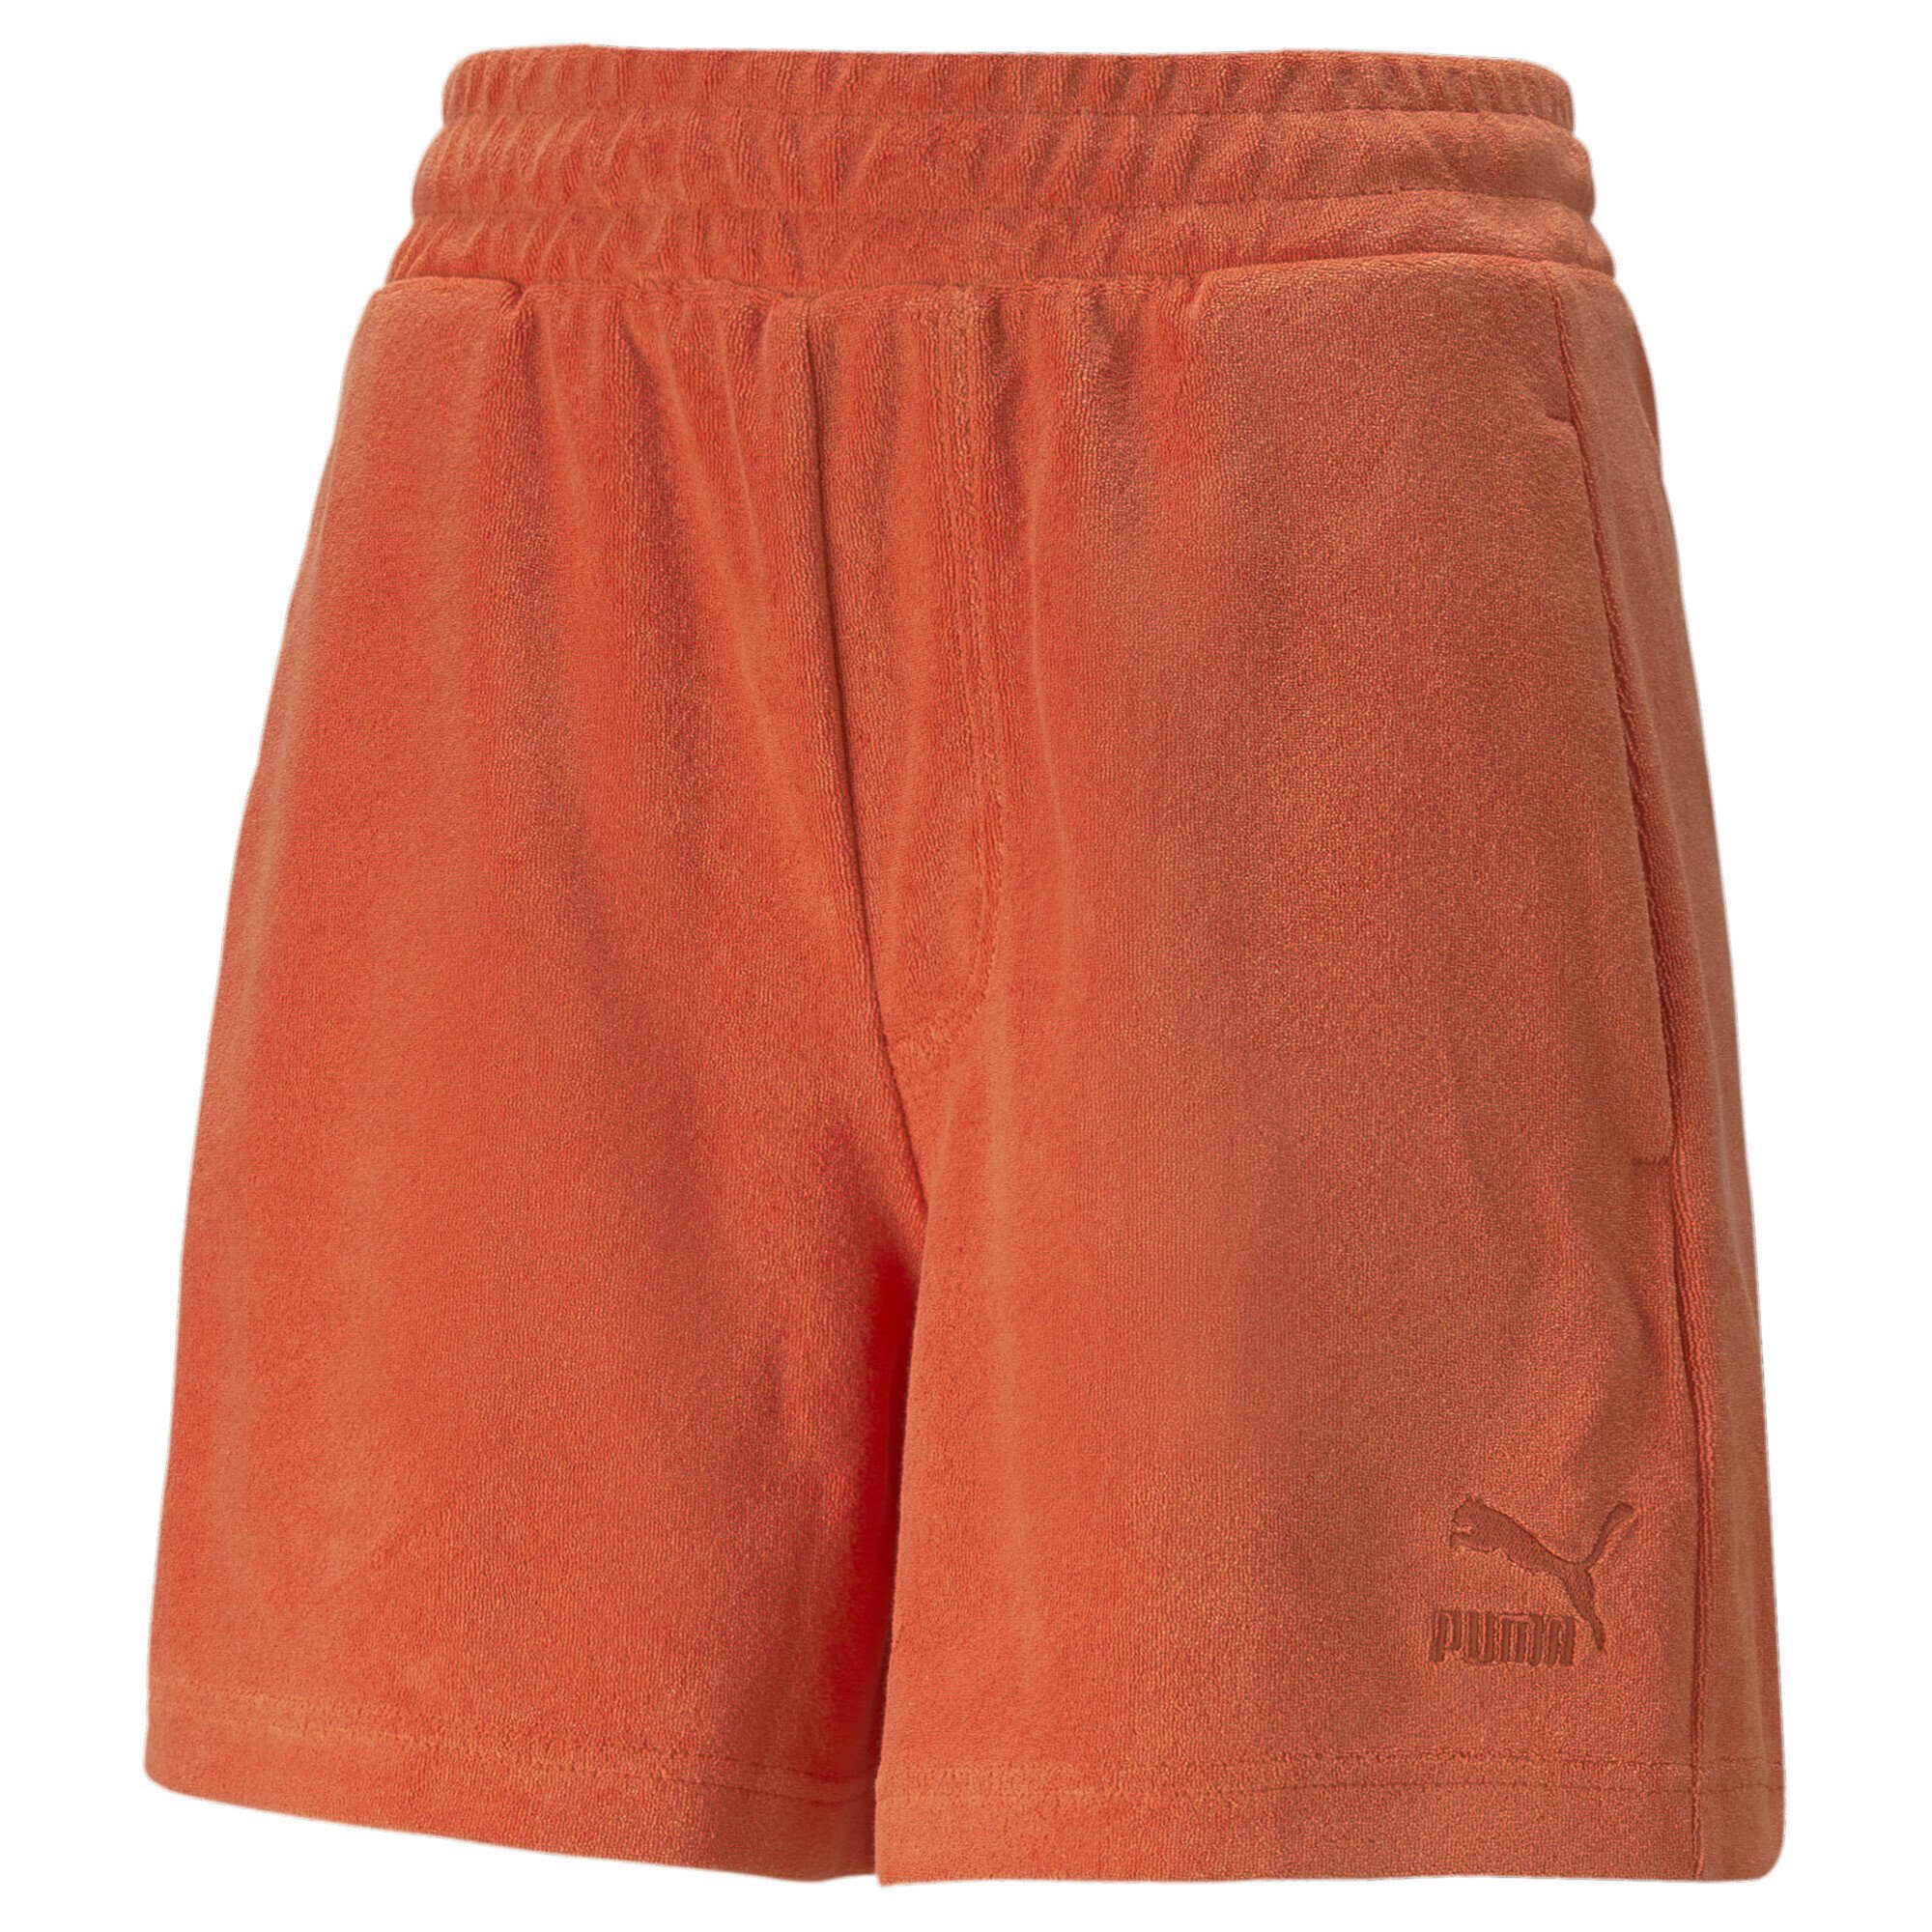 PUMA Sporthose Classics Frottee-Shorts Damen Chili Powder Orange